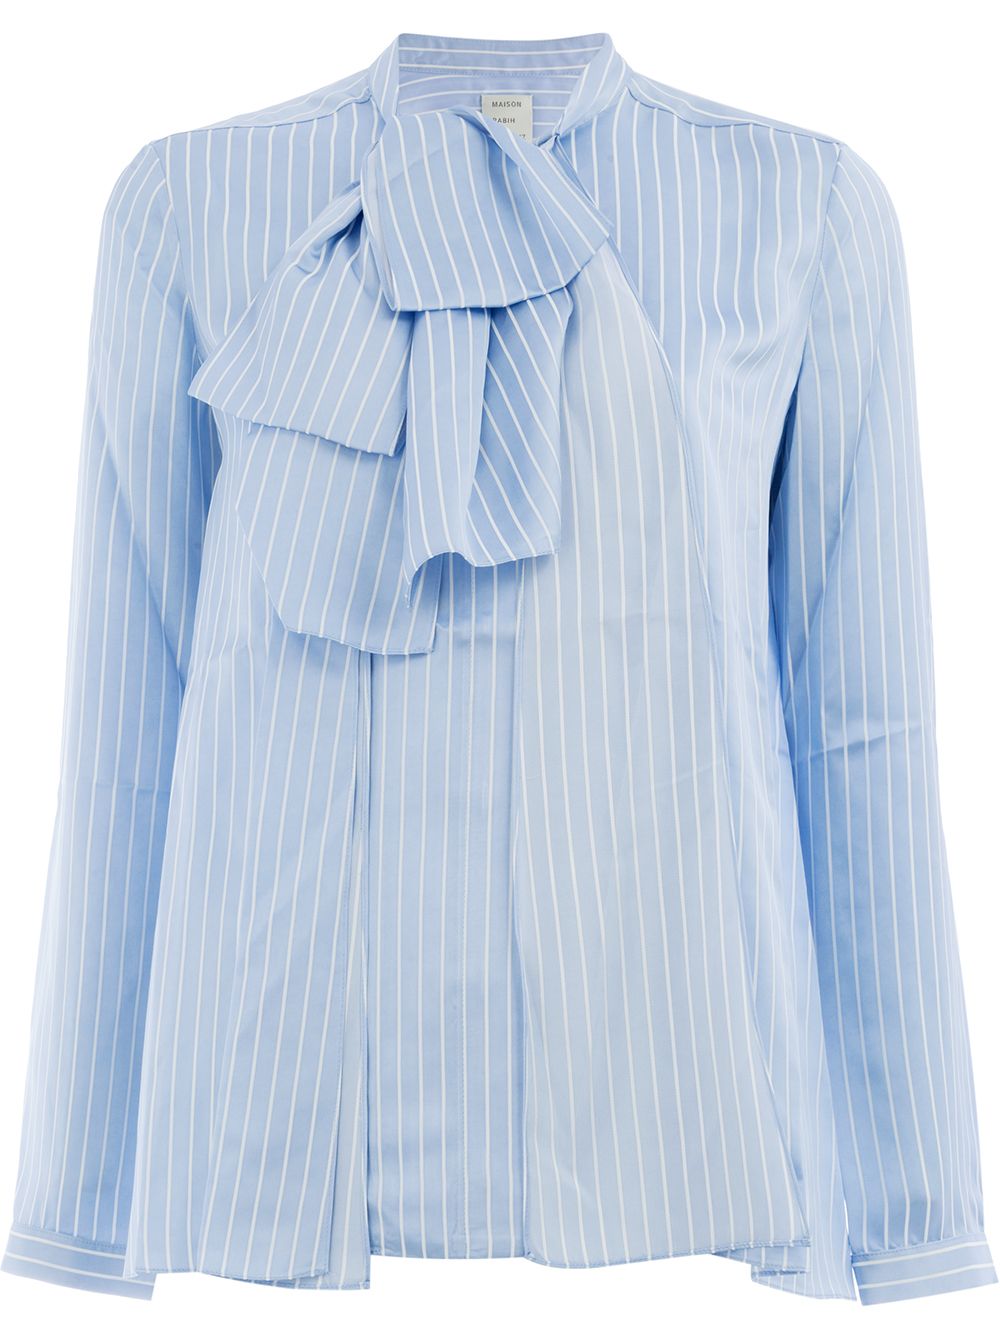 фото Maison rabih kayrouz striped blouse